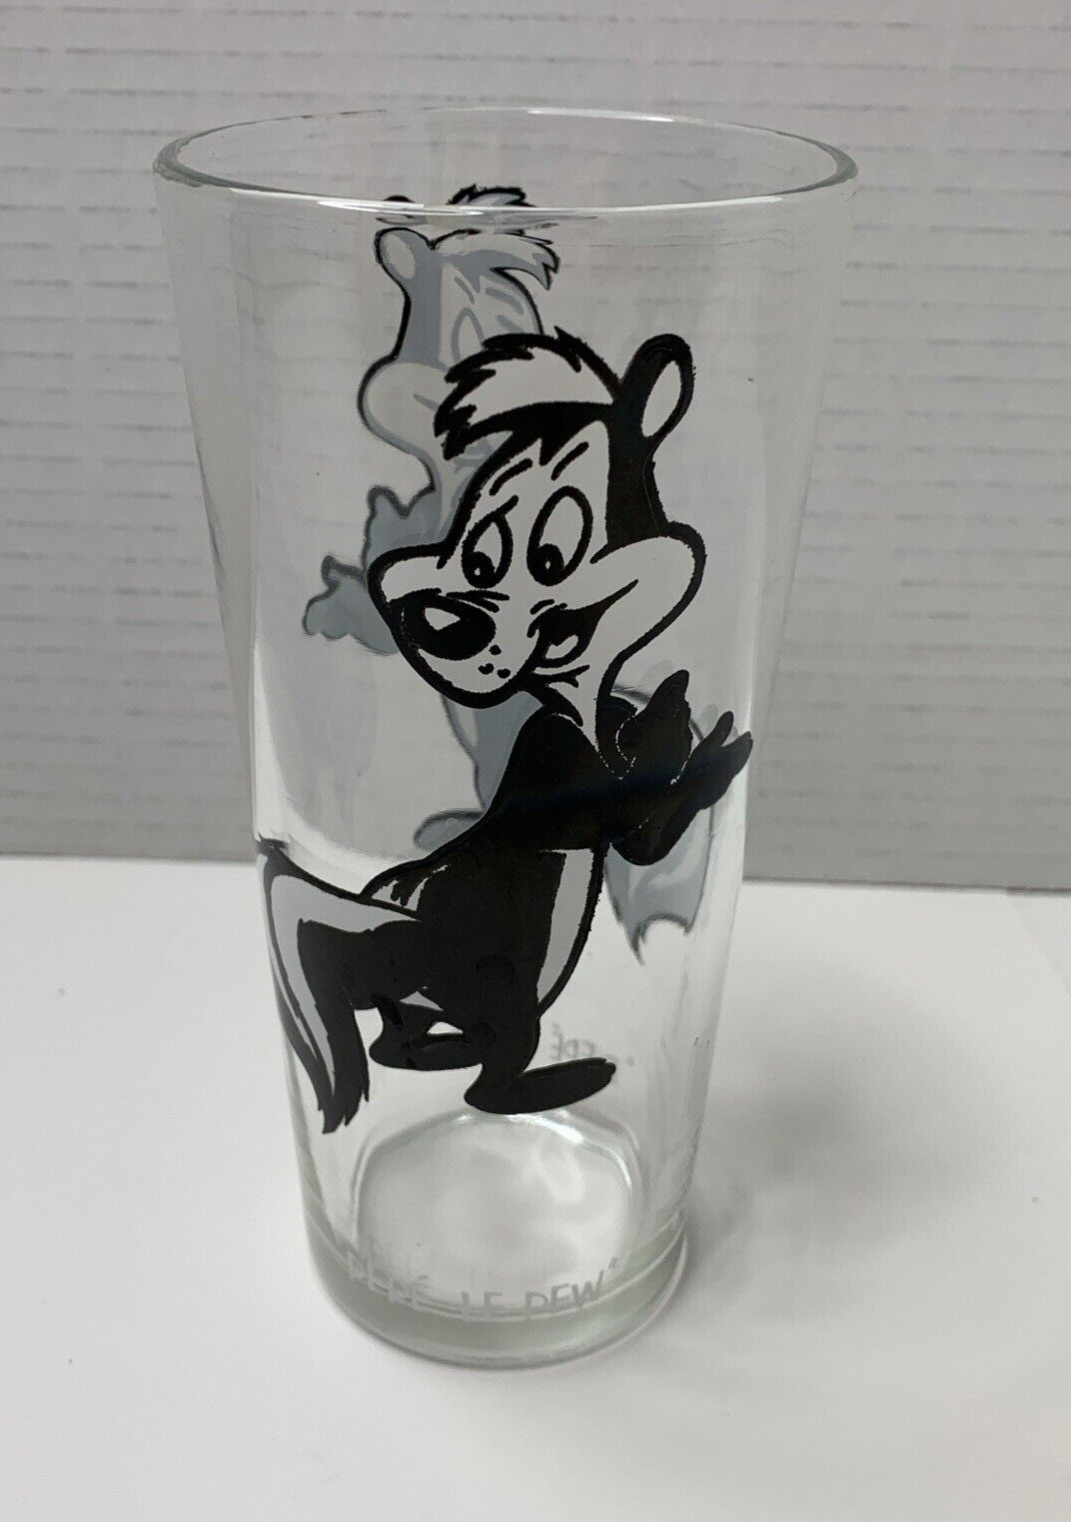 Vintage 1973 PEPE LE PEW Pepsi Glass Collector Series Warner Bros Looney Tunes